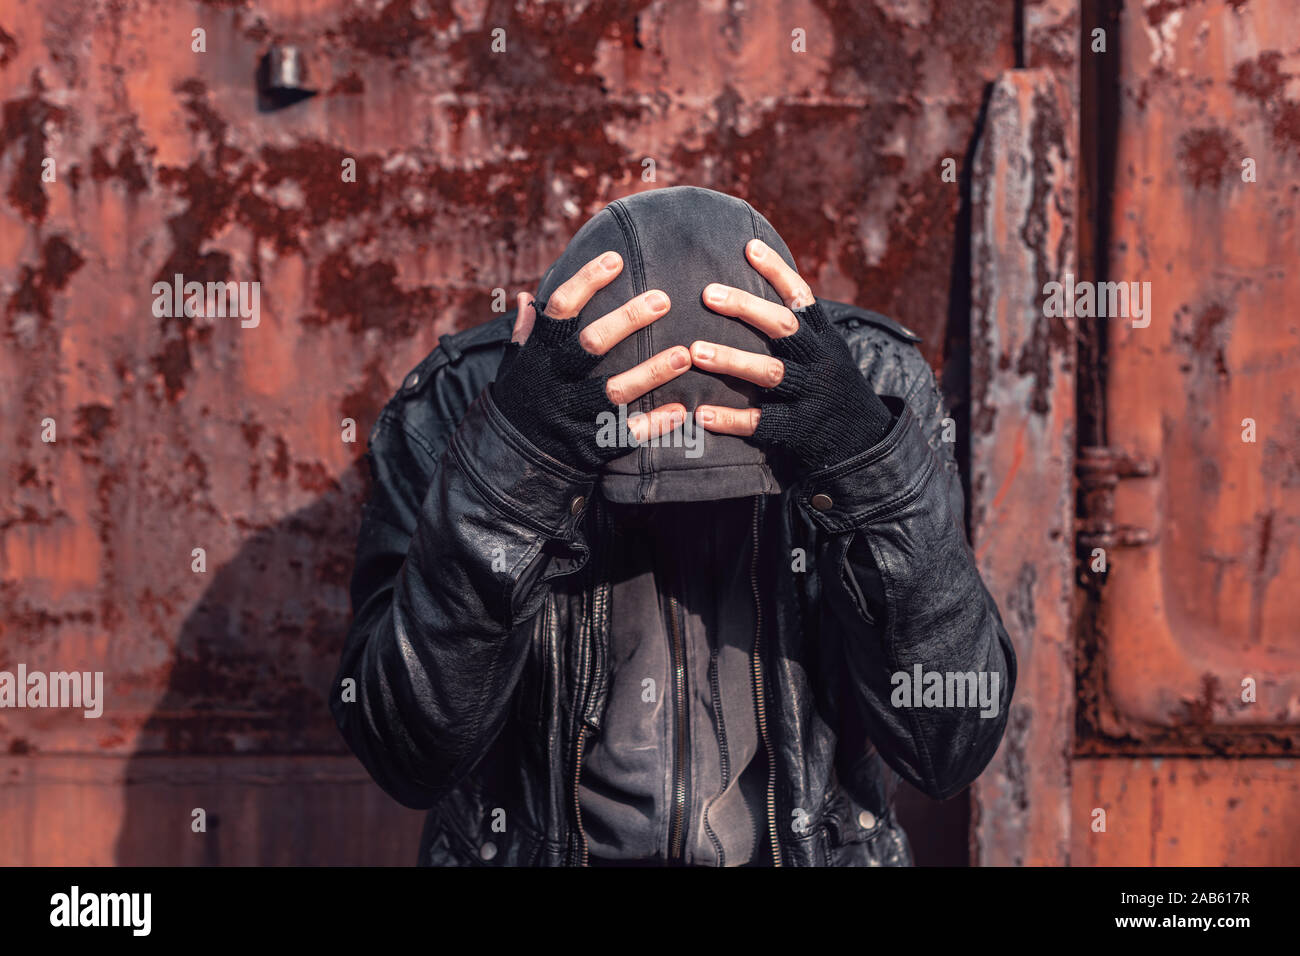 Obdachloser Drogenabhängiger in Enthaltsamkeit Krise, konzeptionelle Porträt mit selektiven Fokus Stockfoto